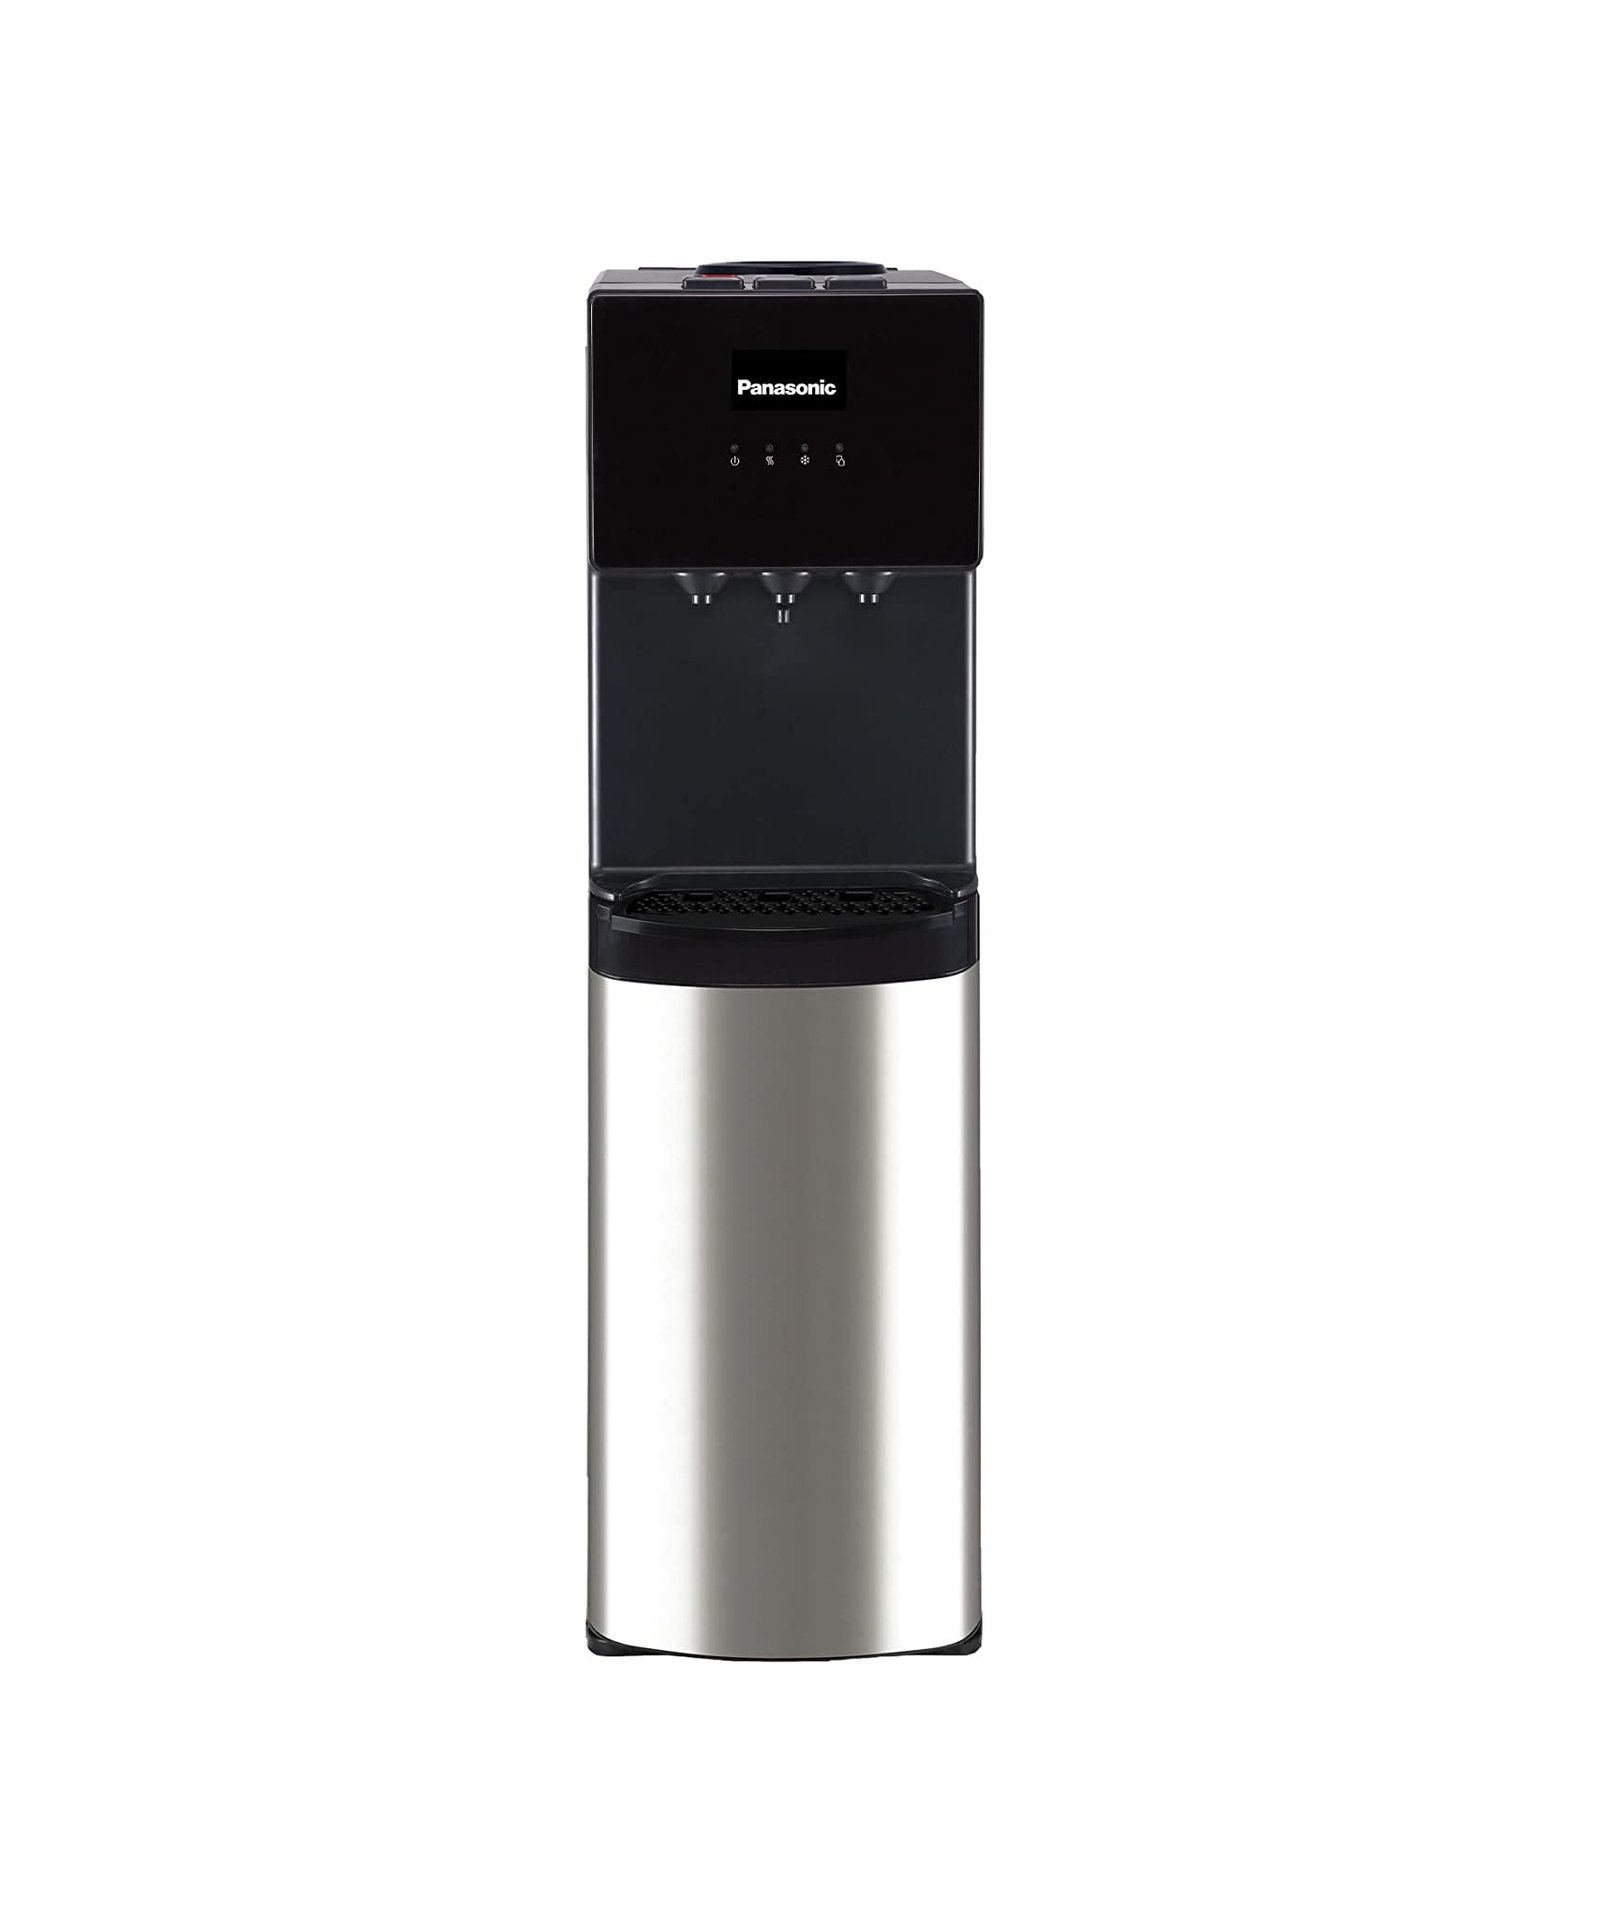 Panasonic Top Loading Water Dispenser 3 Tap Silver Black Model-SDMWD3238TF | 1 Year Brand Warranty.